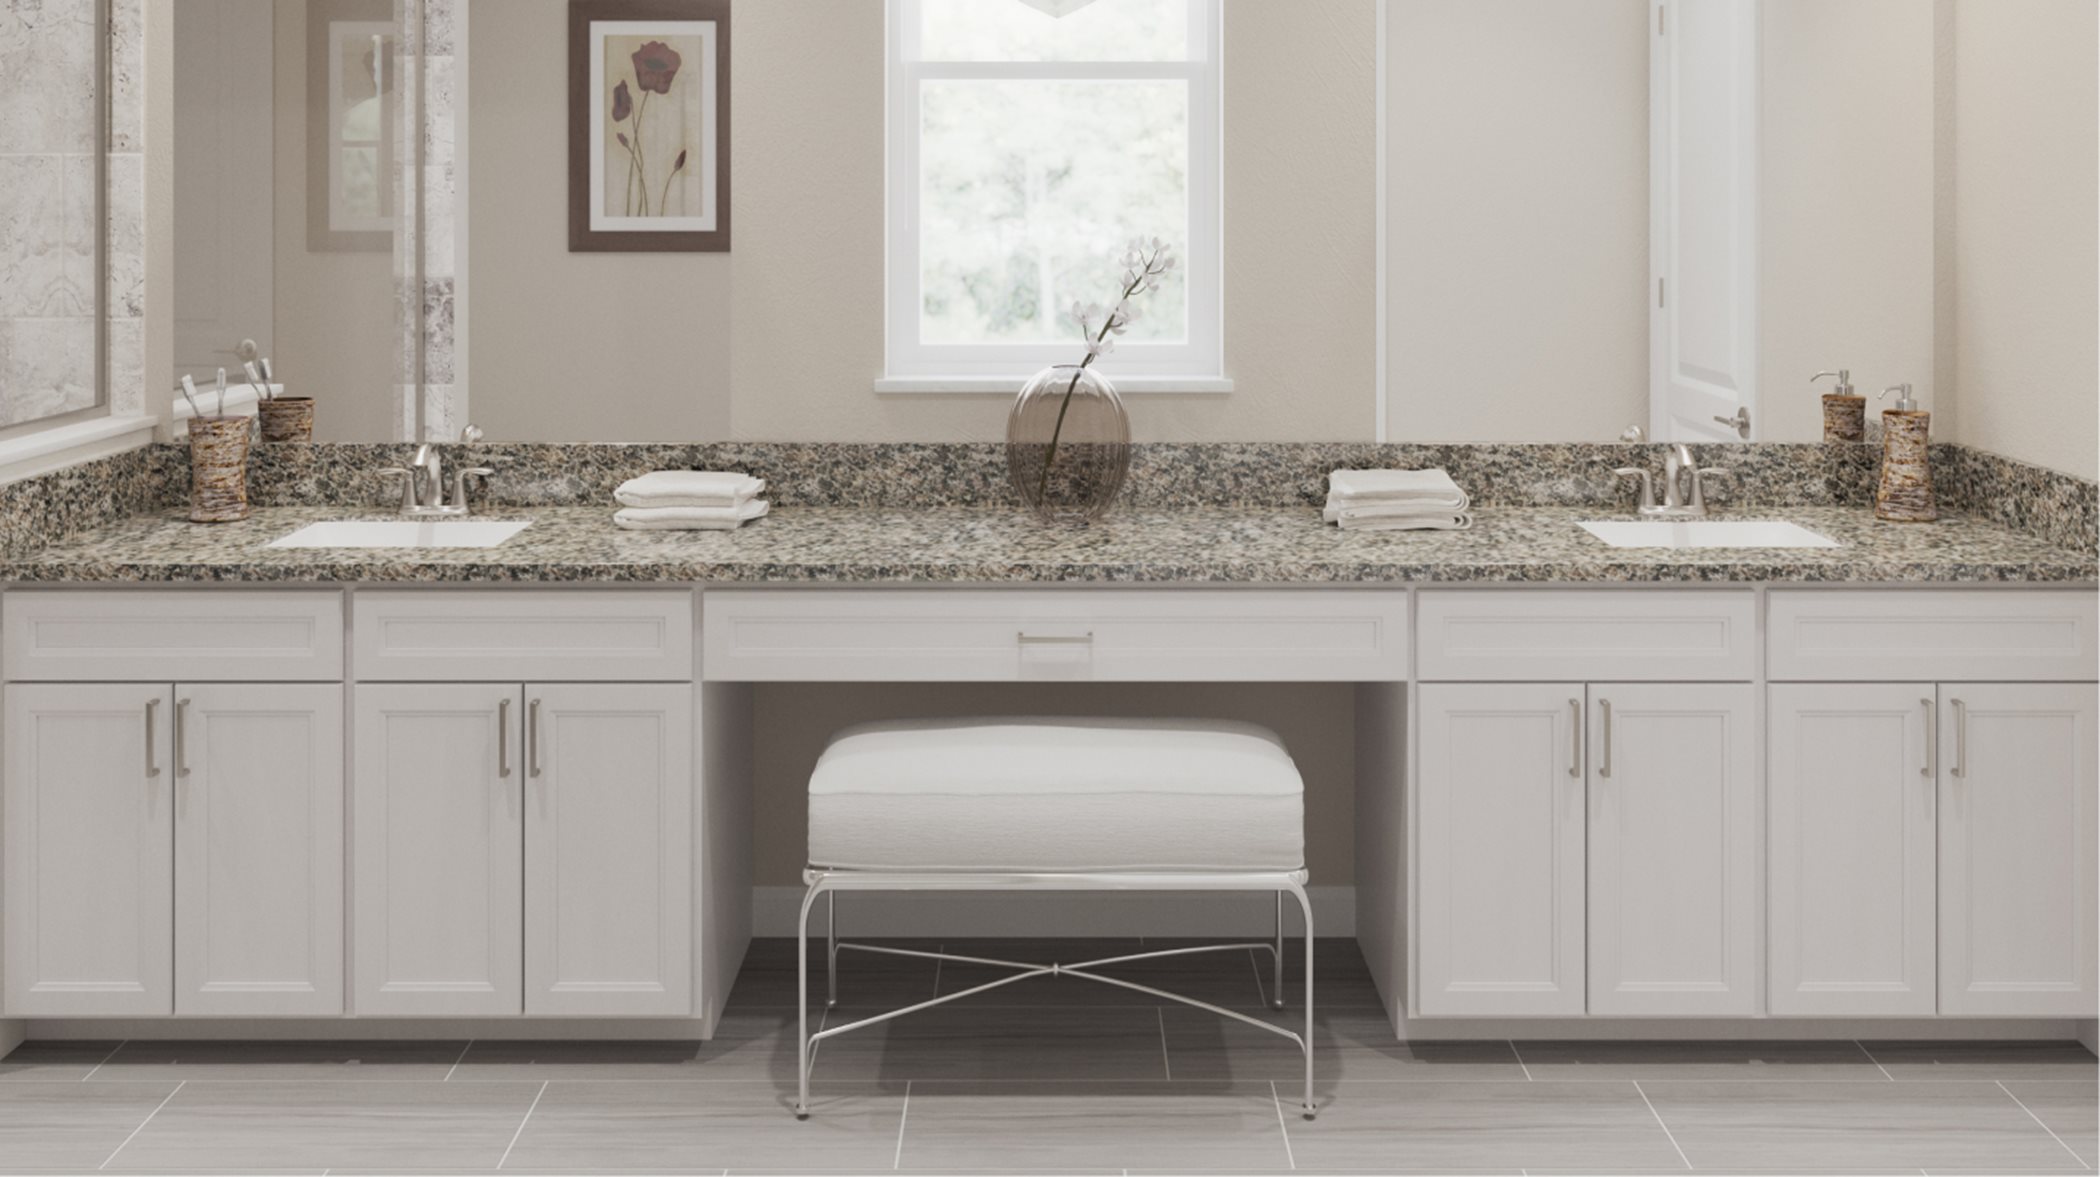 Vanity with durable granite countertops